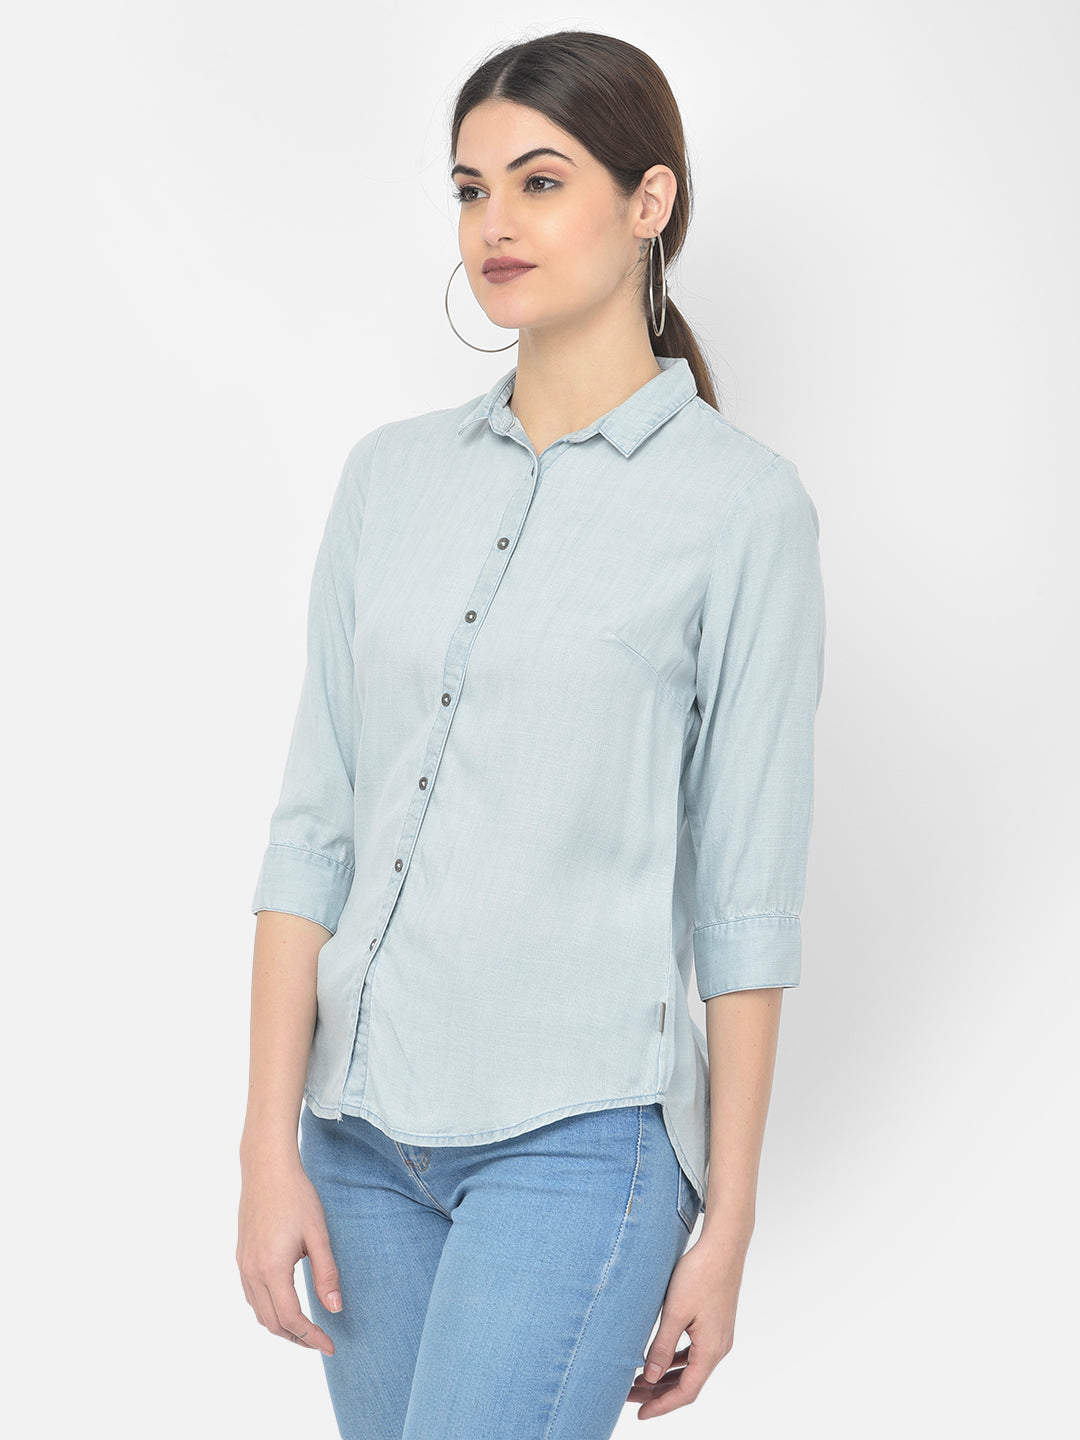 Blue Spread Collar Shirt - Women Shirts